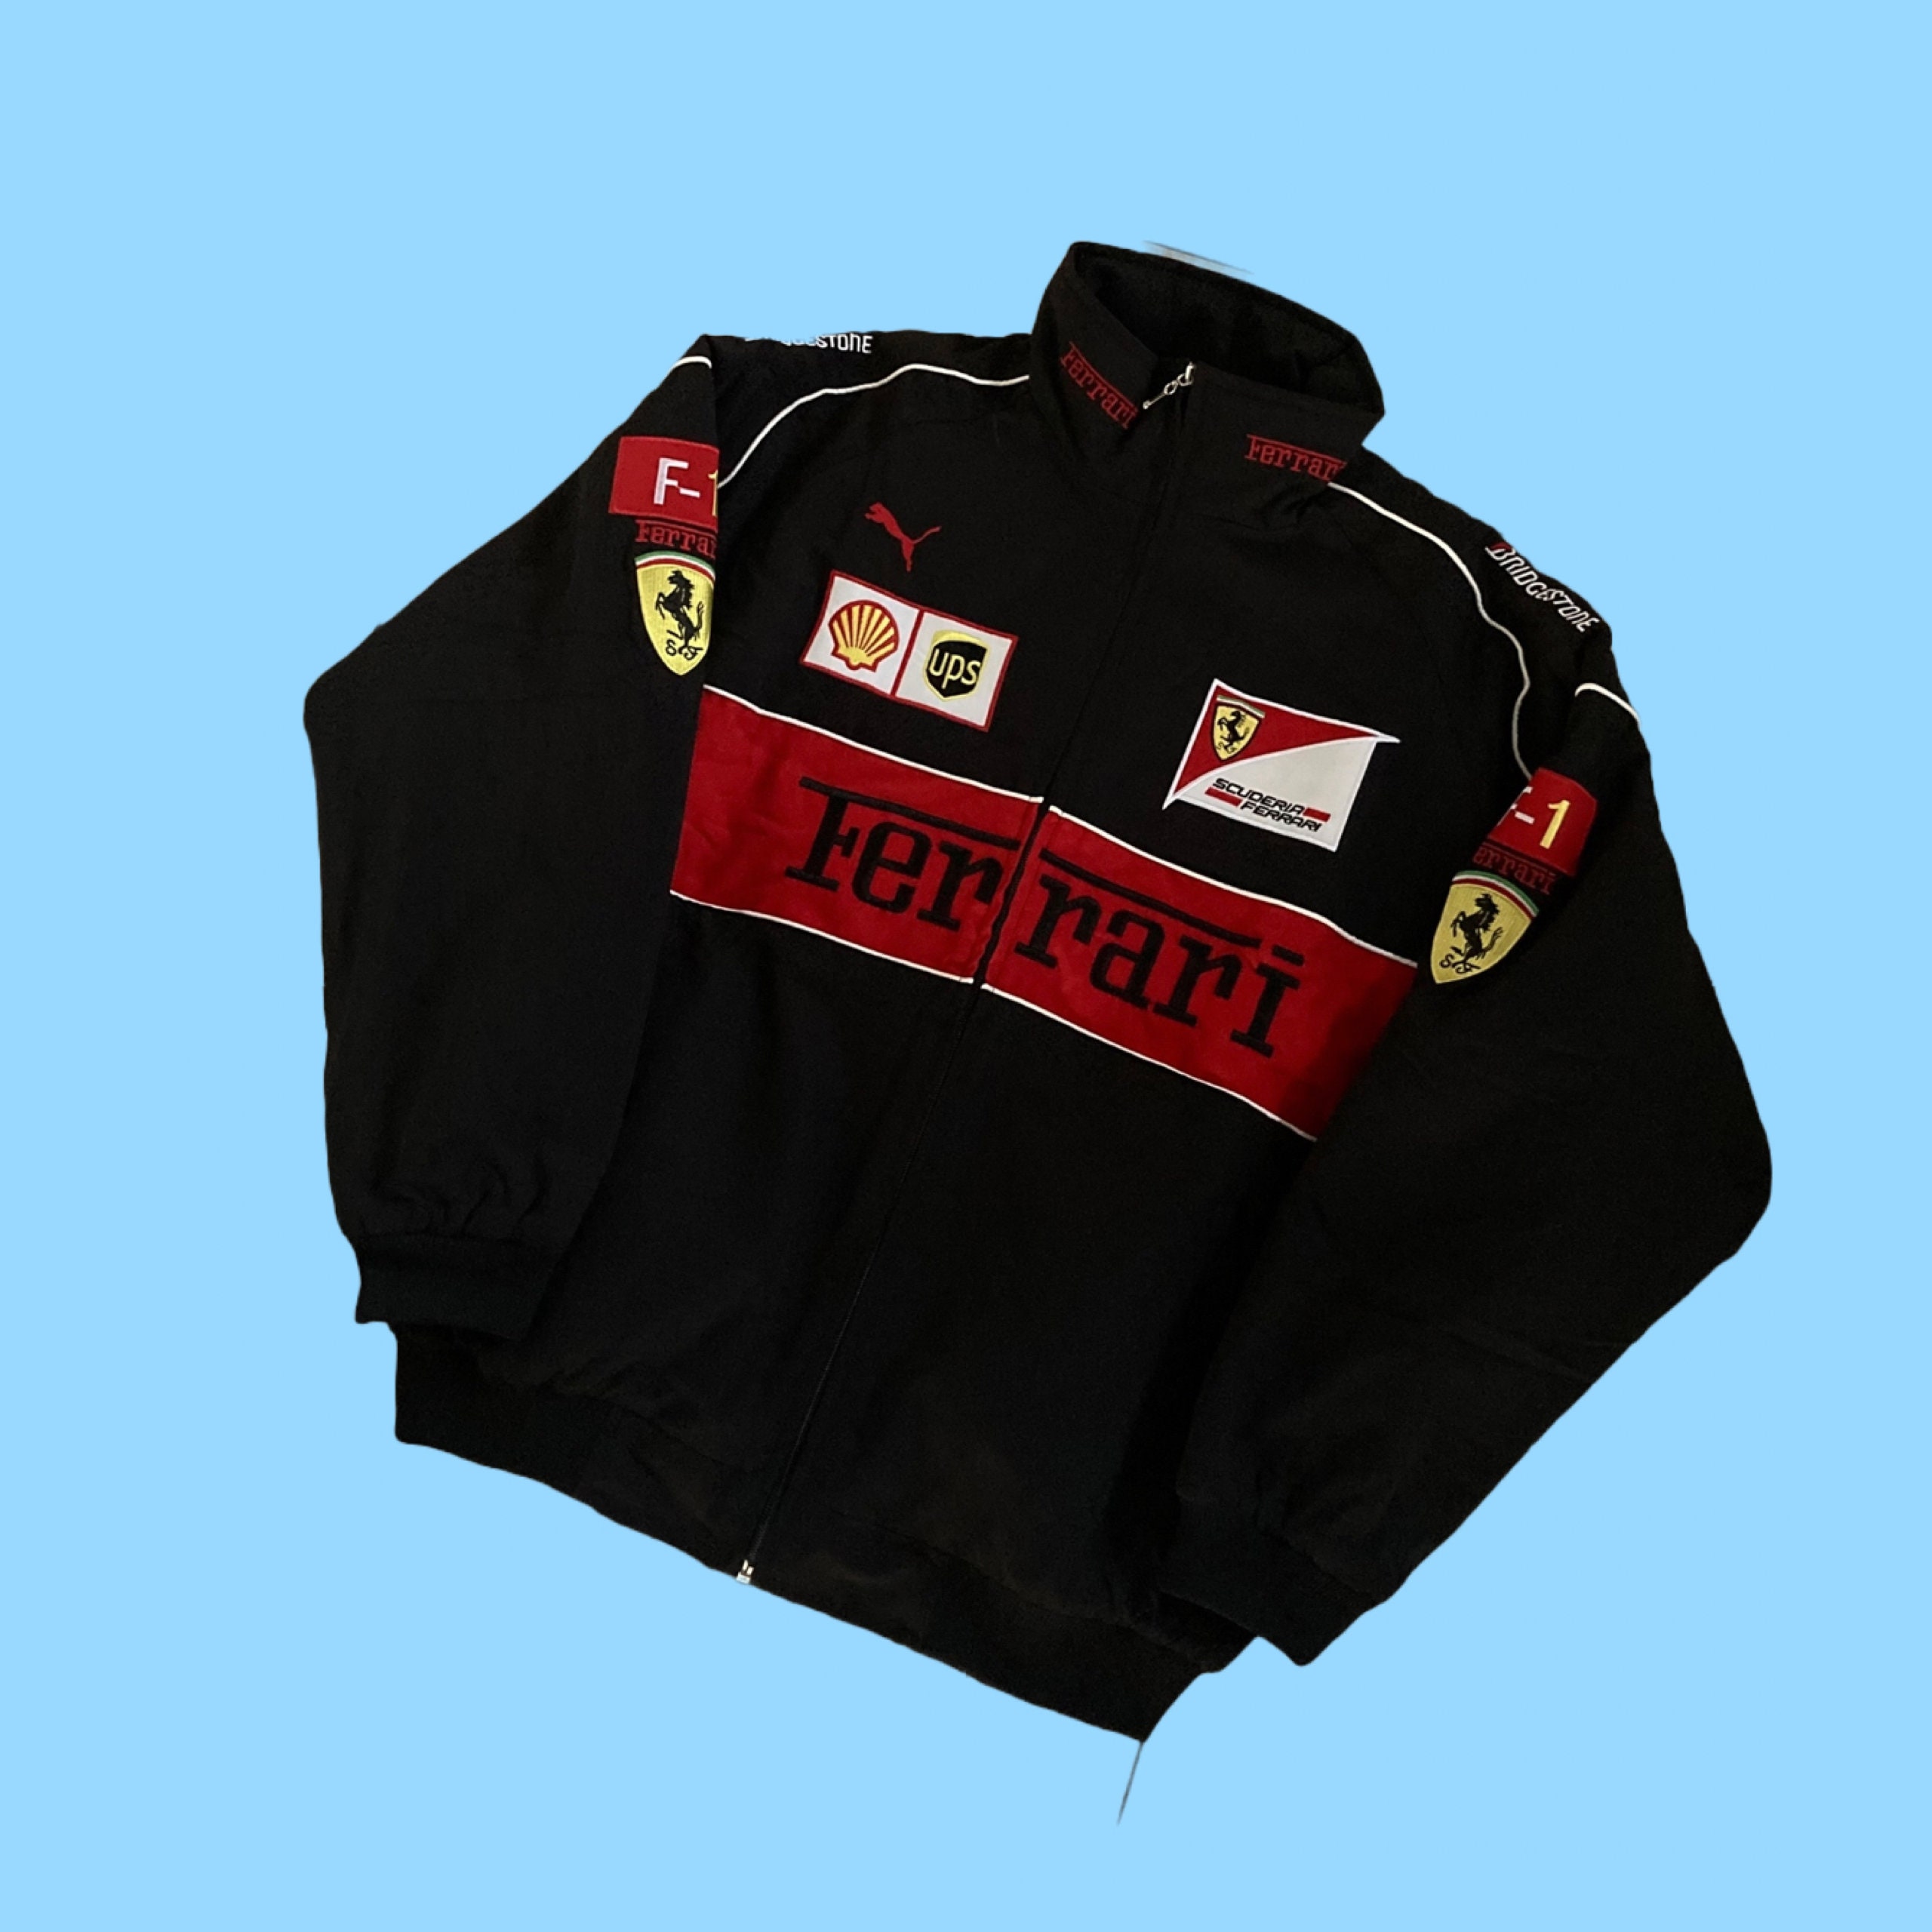 F1 Vintage Racing Jacket - Etsy